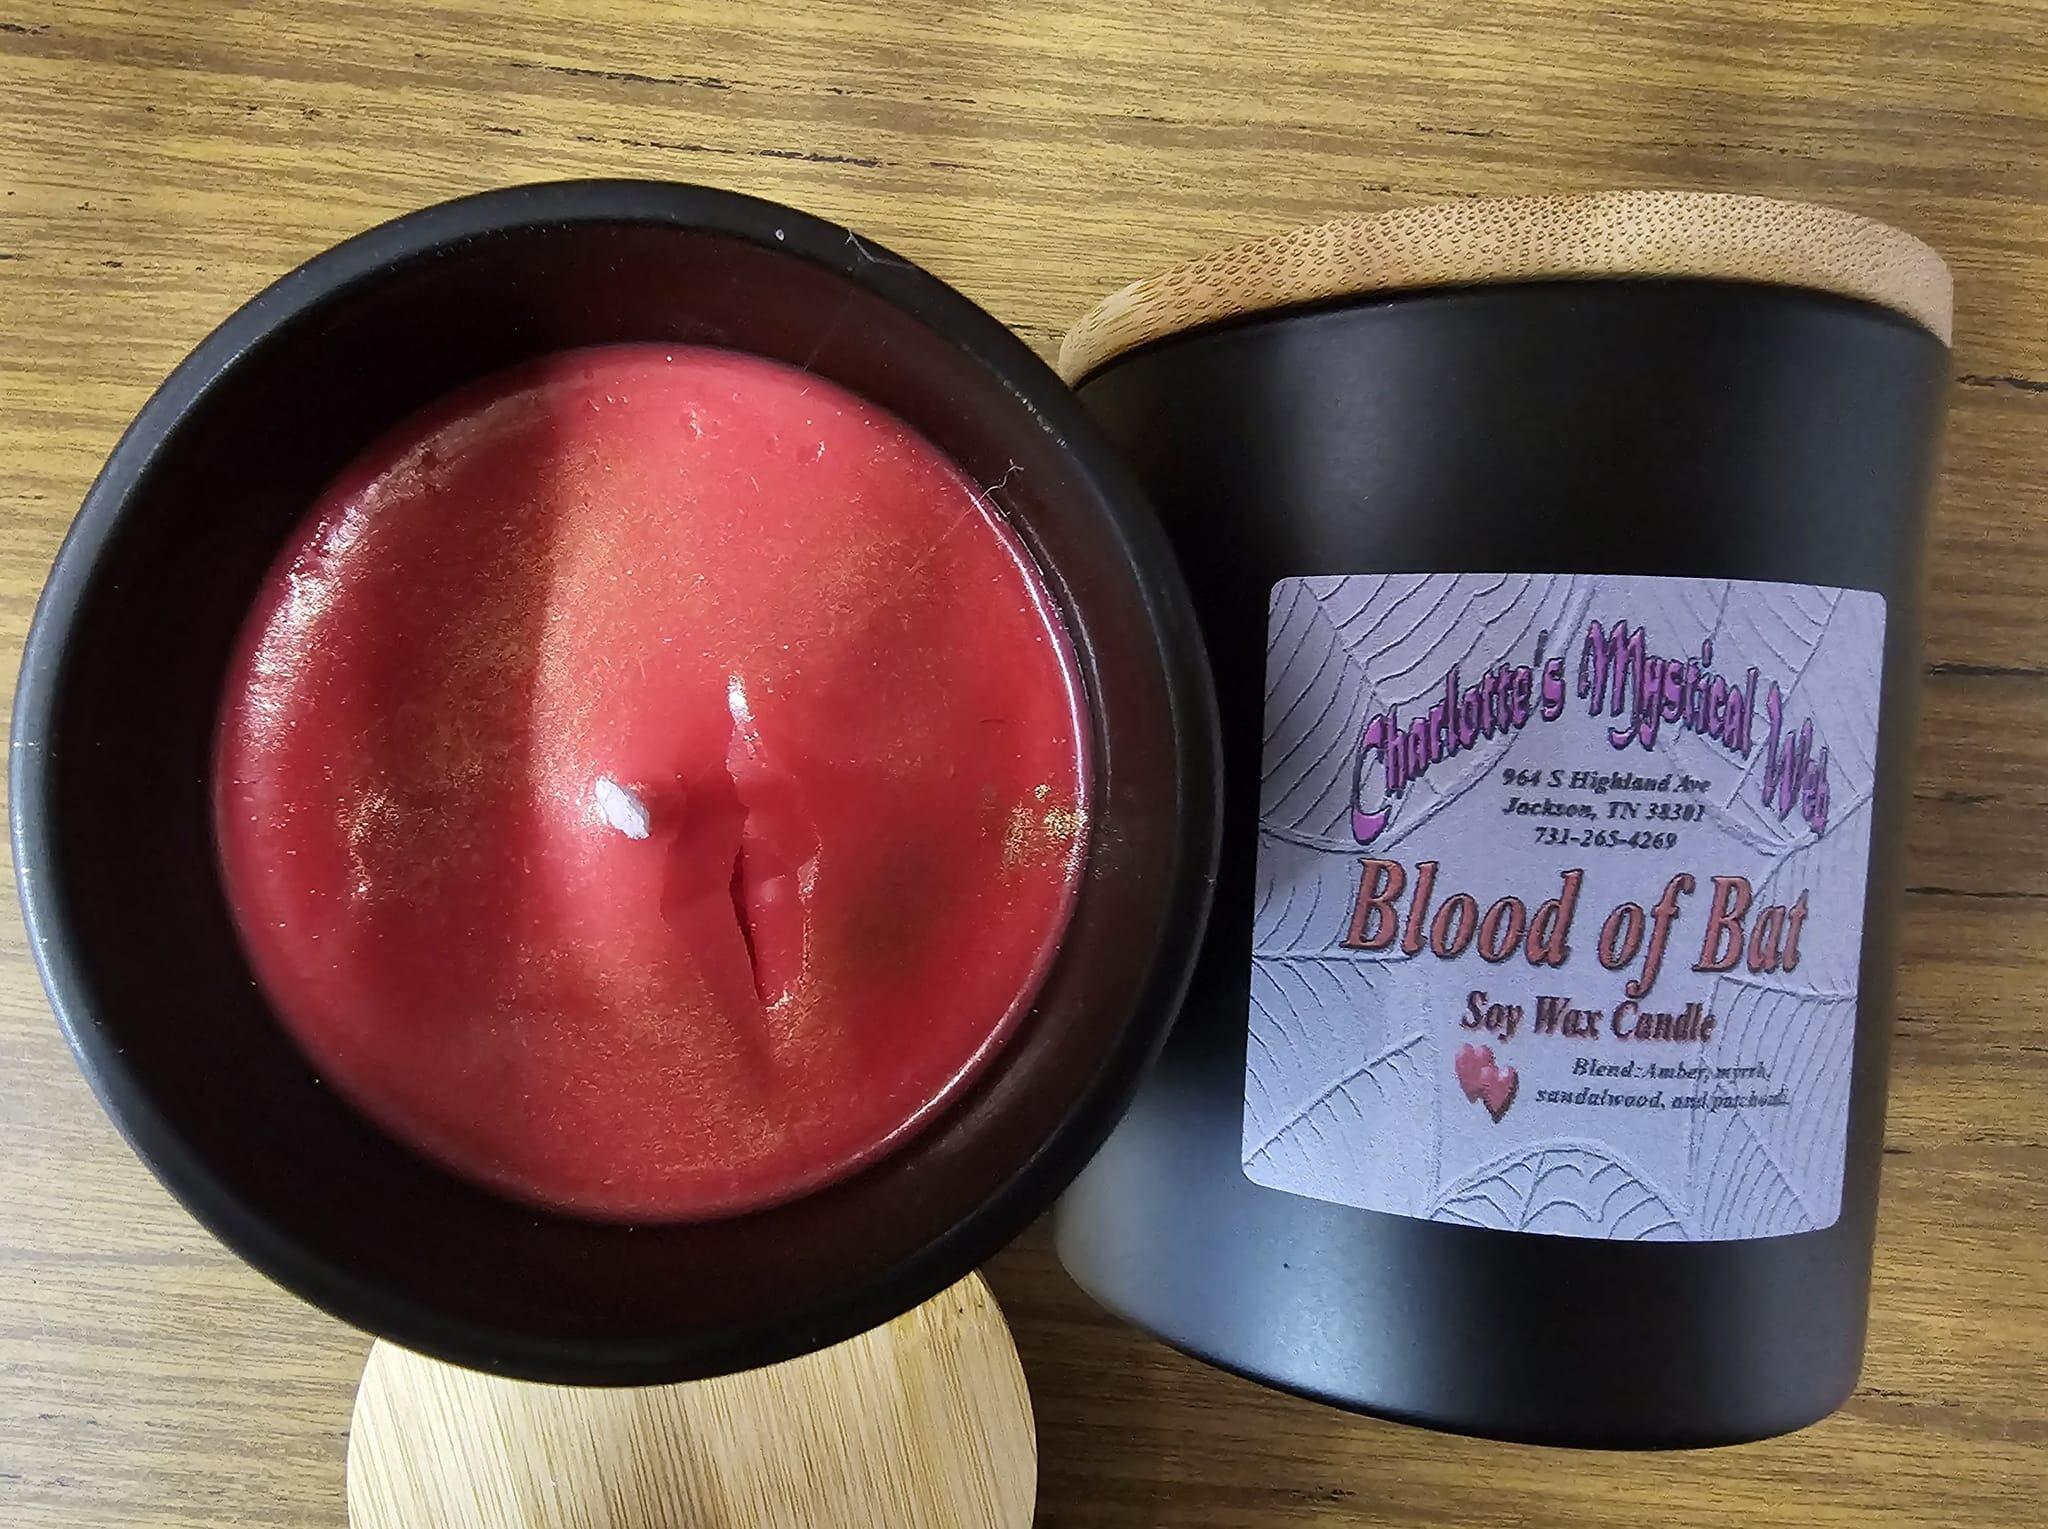 Blood of Bat